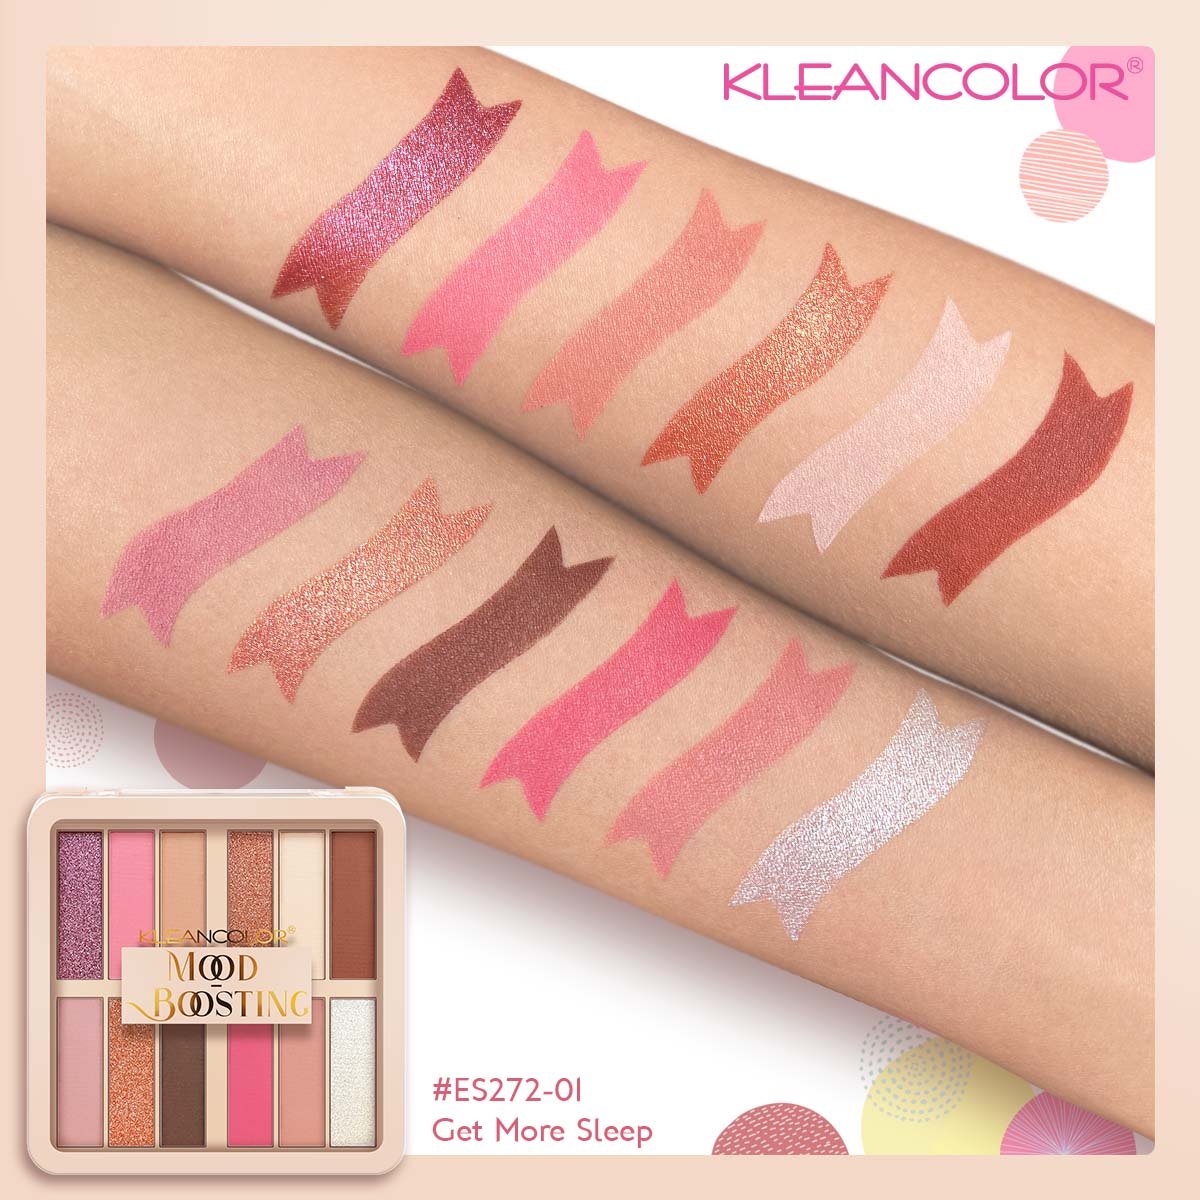 Kleancolor - Mood Boosting Pressed Pigment Palette Get More Sleep